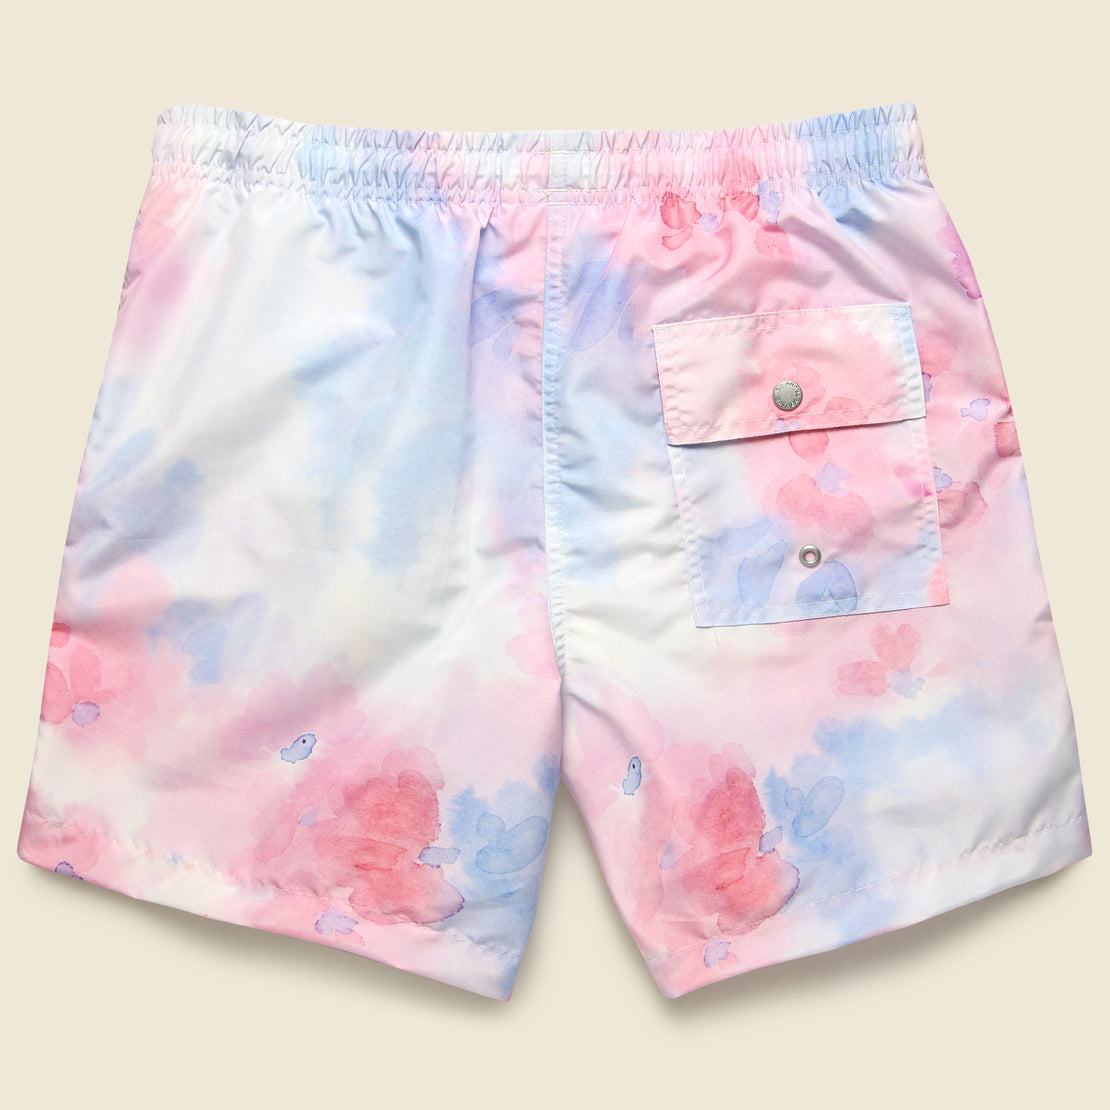 Tie Dye Swim Trunk - Pink - Bather - STAG Provisions - Shorts - Swim